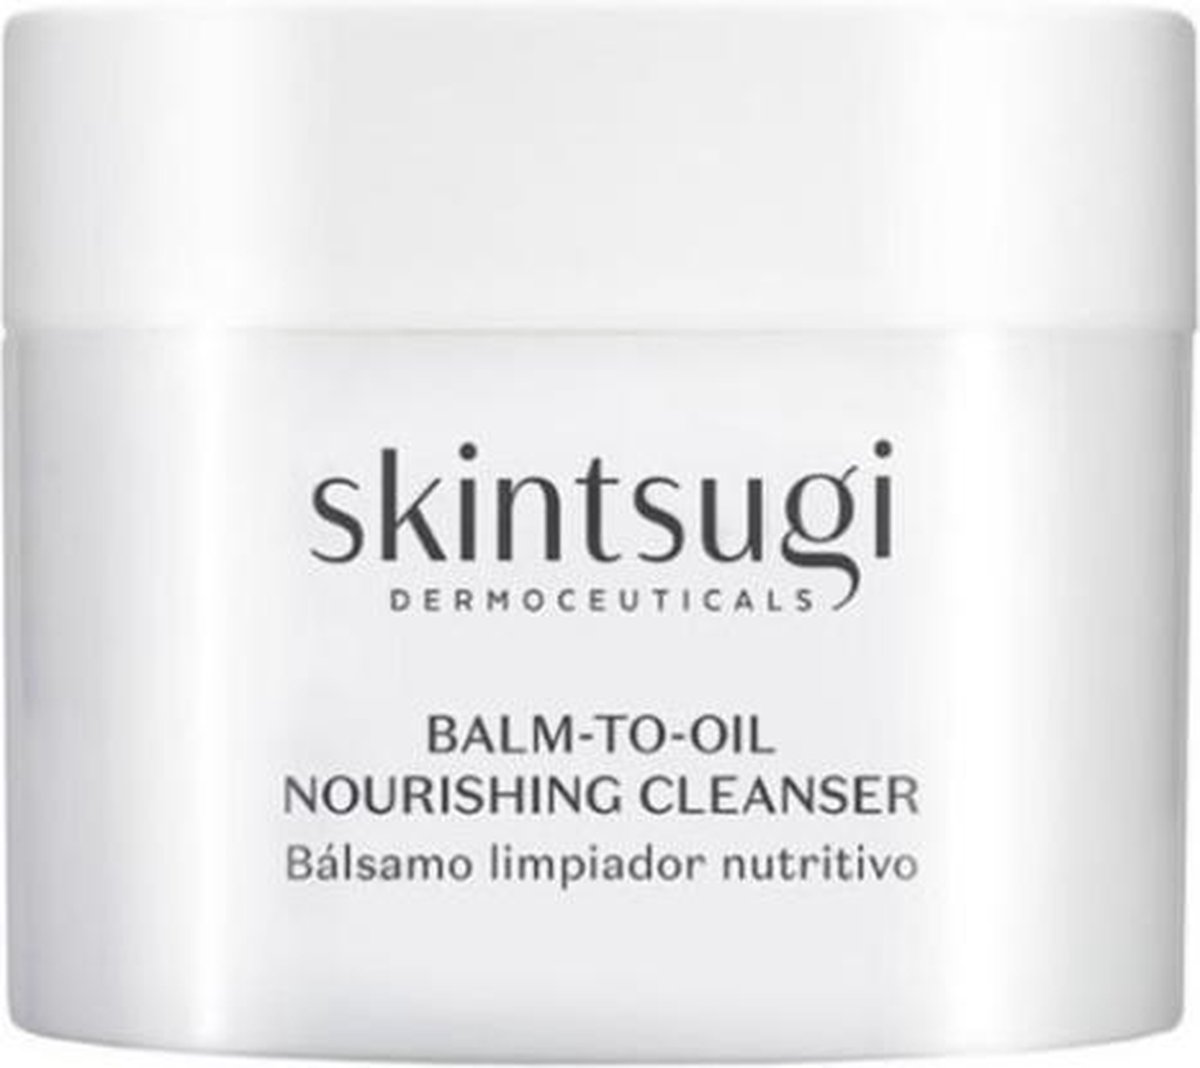 Skintsugi Balm-to-oil Nourishing Cleanser Bálsamo Limpiador Nutritivo 75 Ml